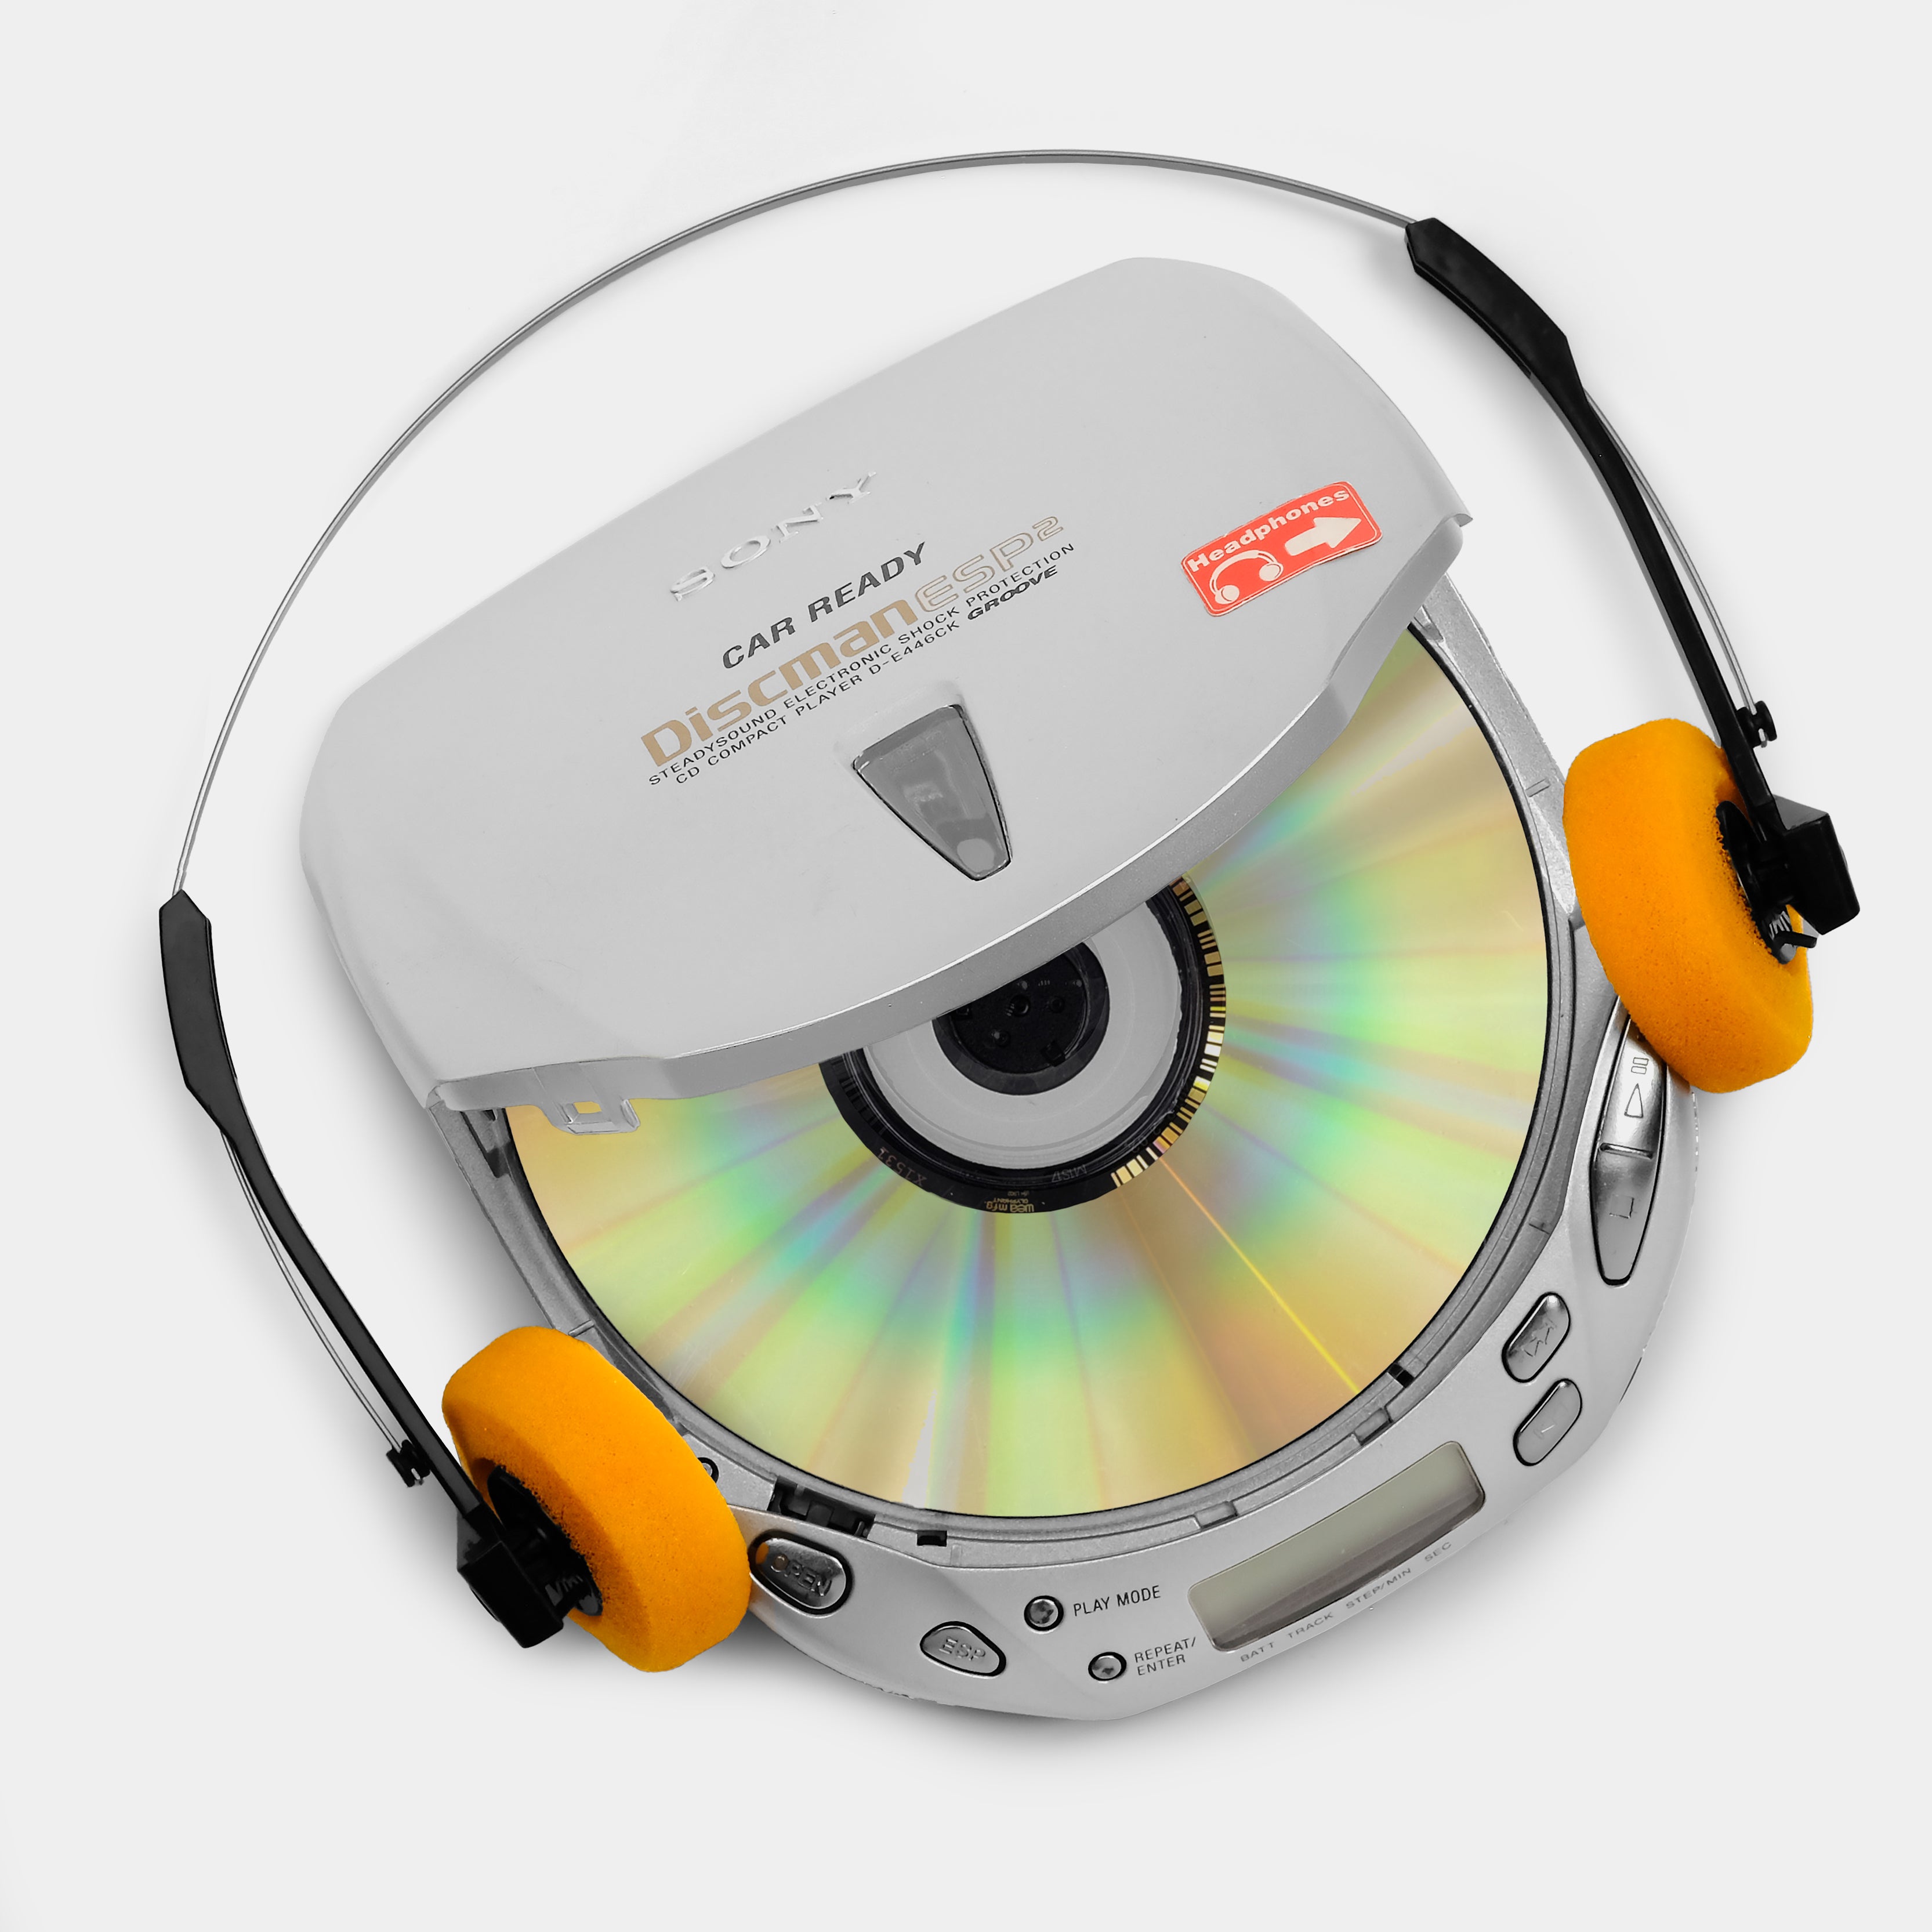 Sony Discman D-E446CK Portable CD Player